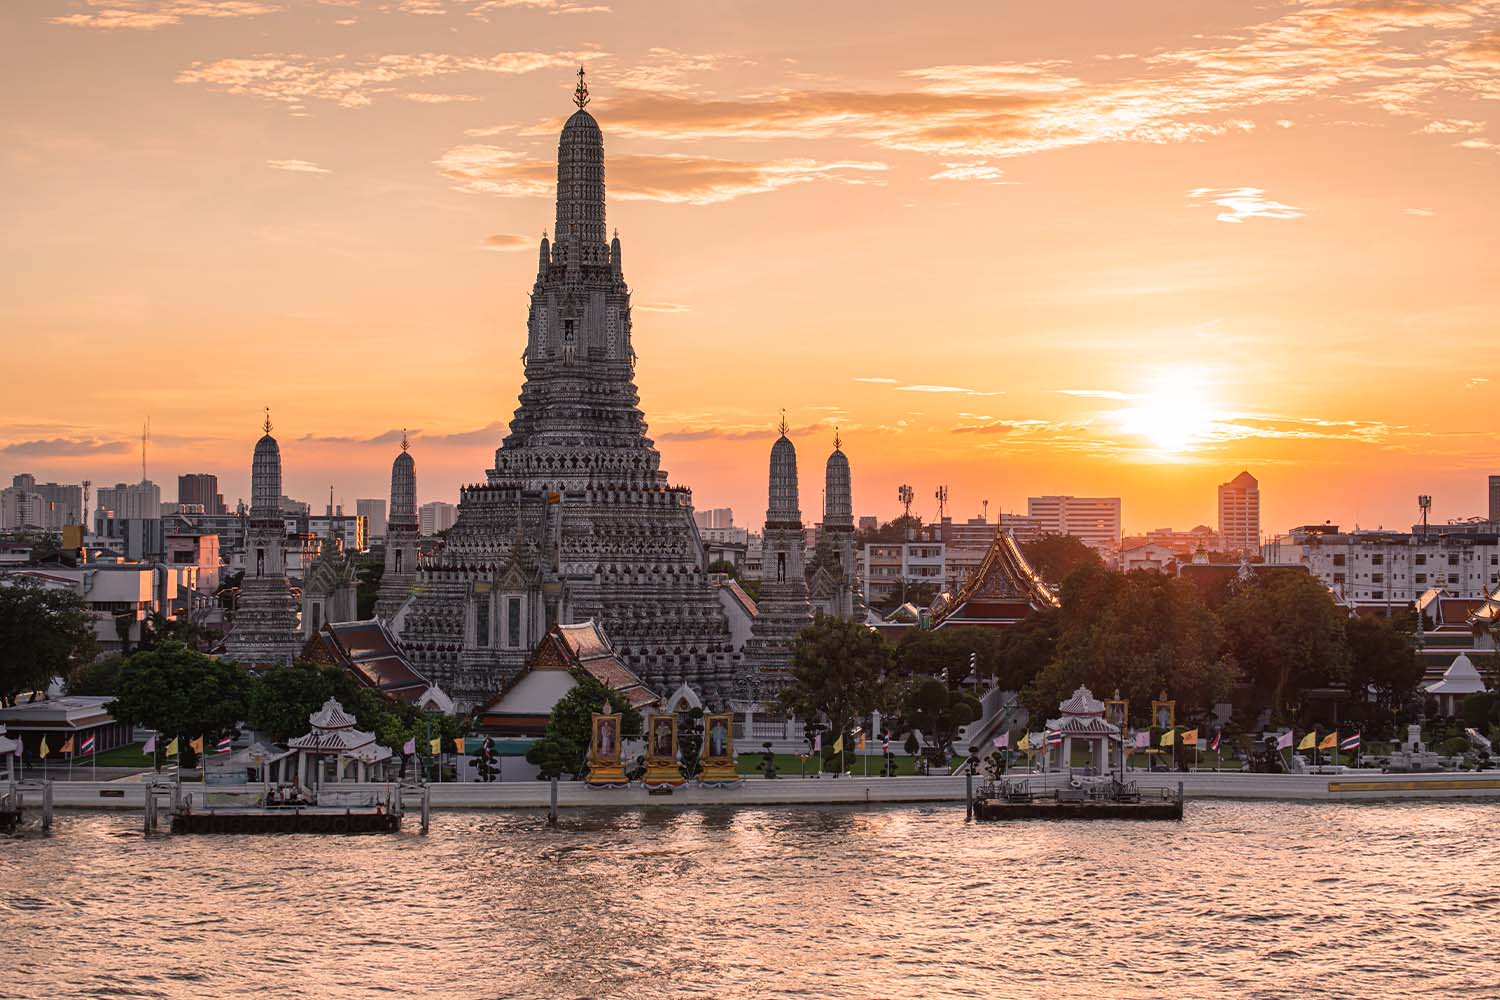 Aerial view of Wat Arun Ratchawararam temple on the Chao Phraya River at sunset, illuminated by artificial light.  Bangkok, Thailand